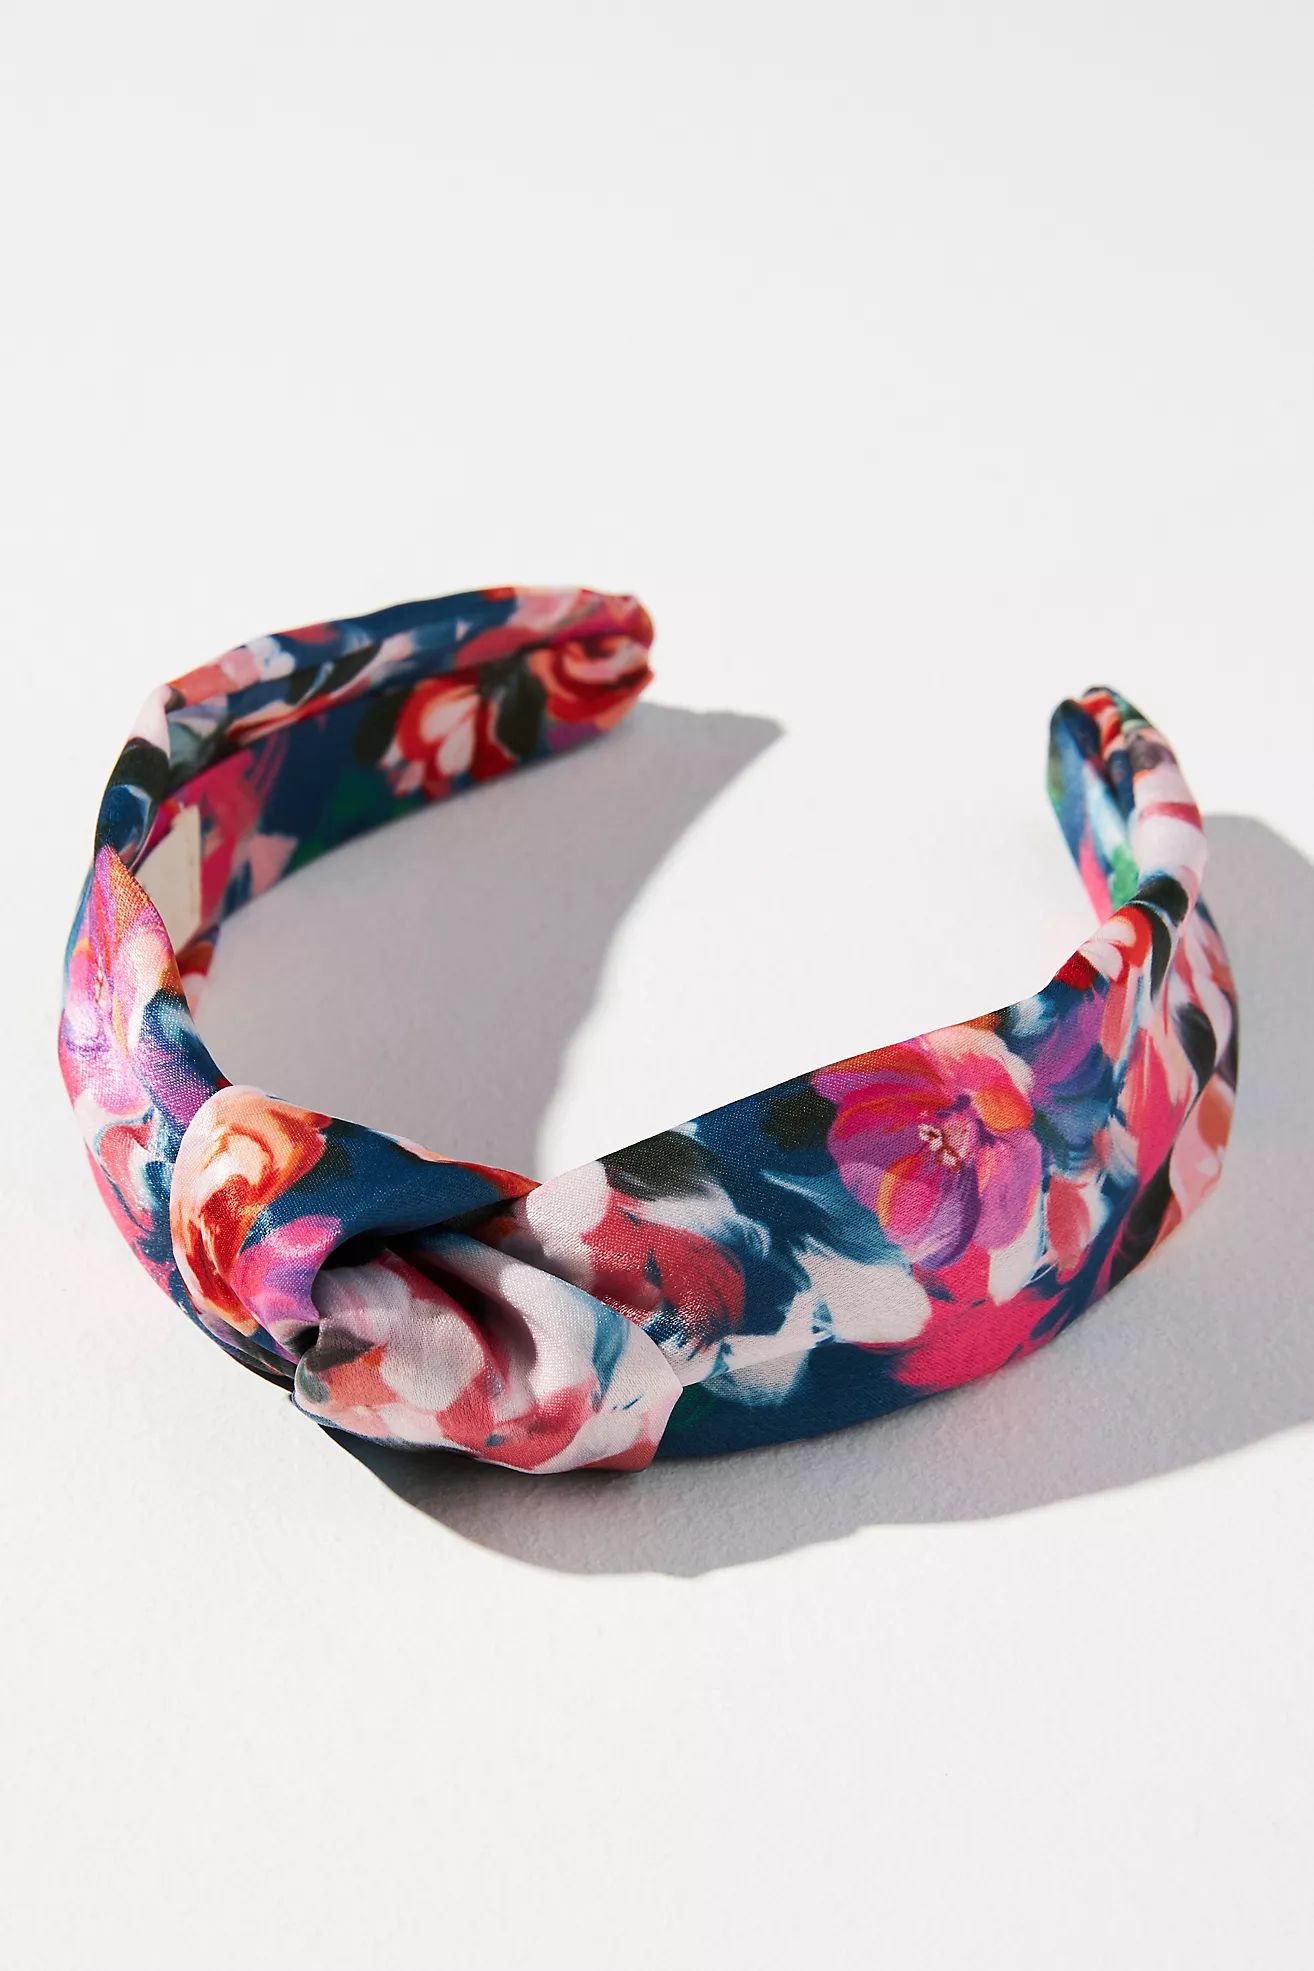 Kachel Everly Hot Floral Knot Headband | Anthropologie (US)